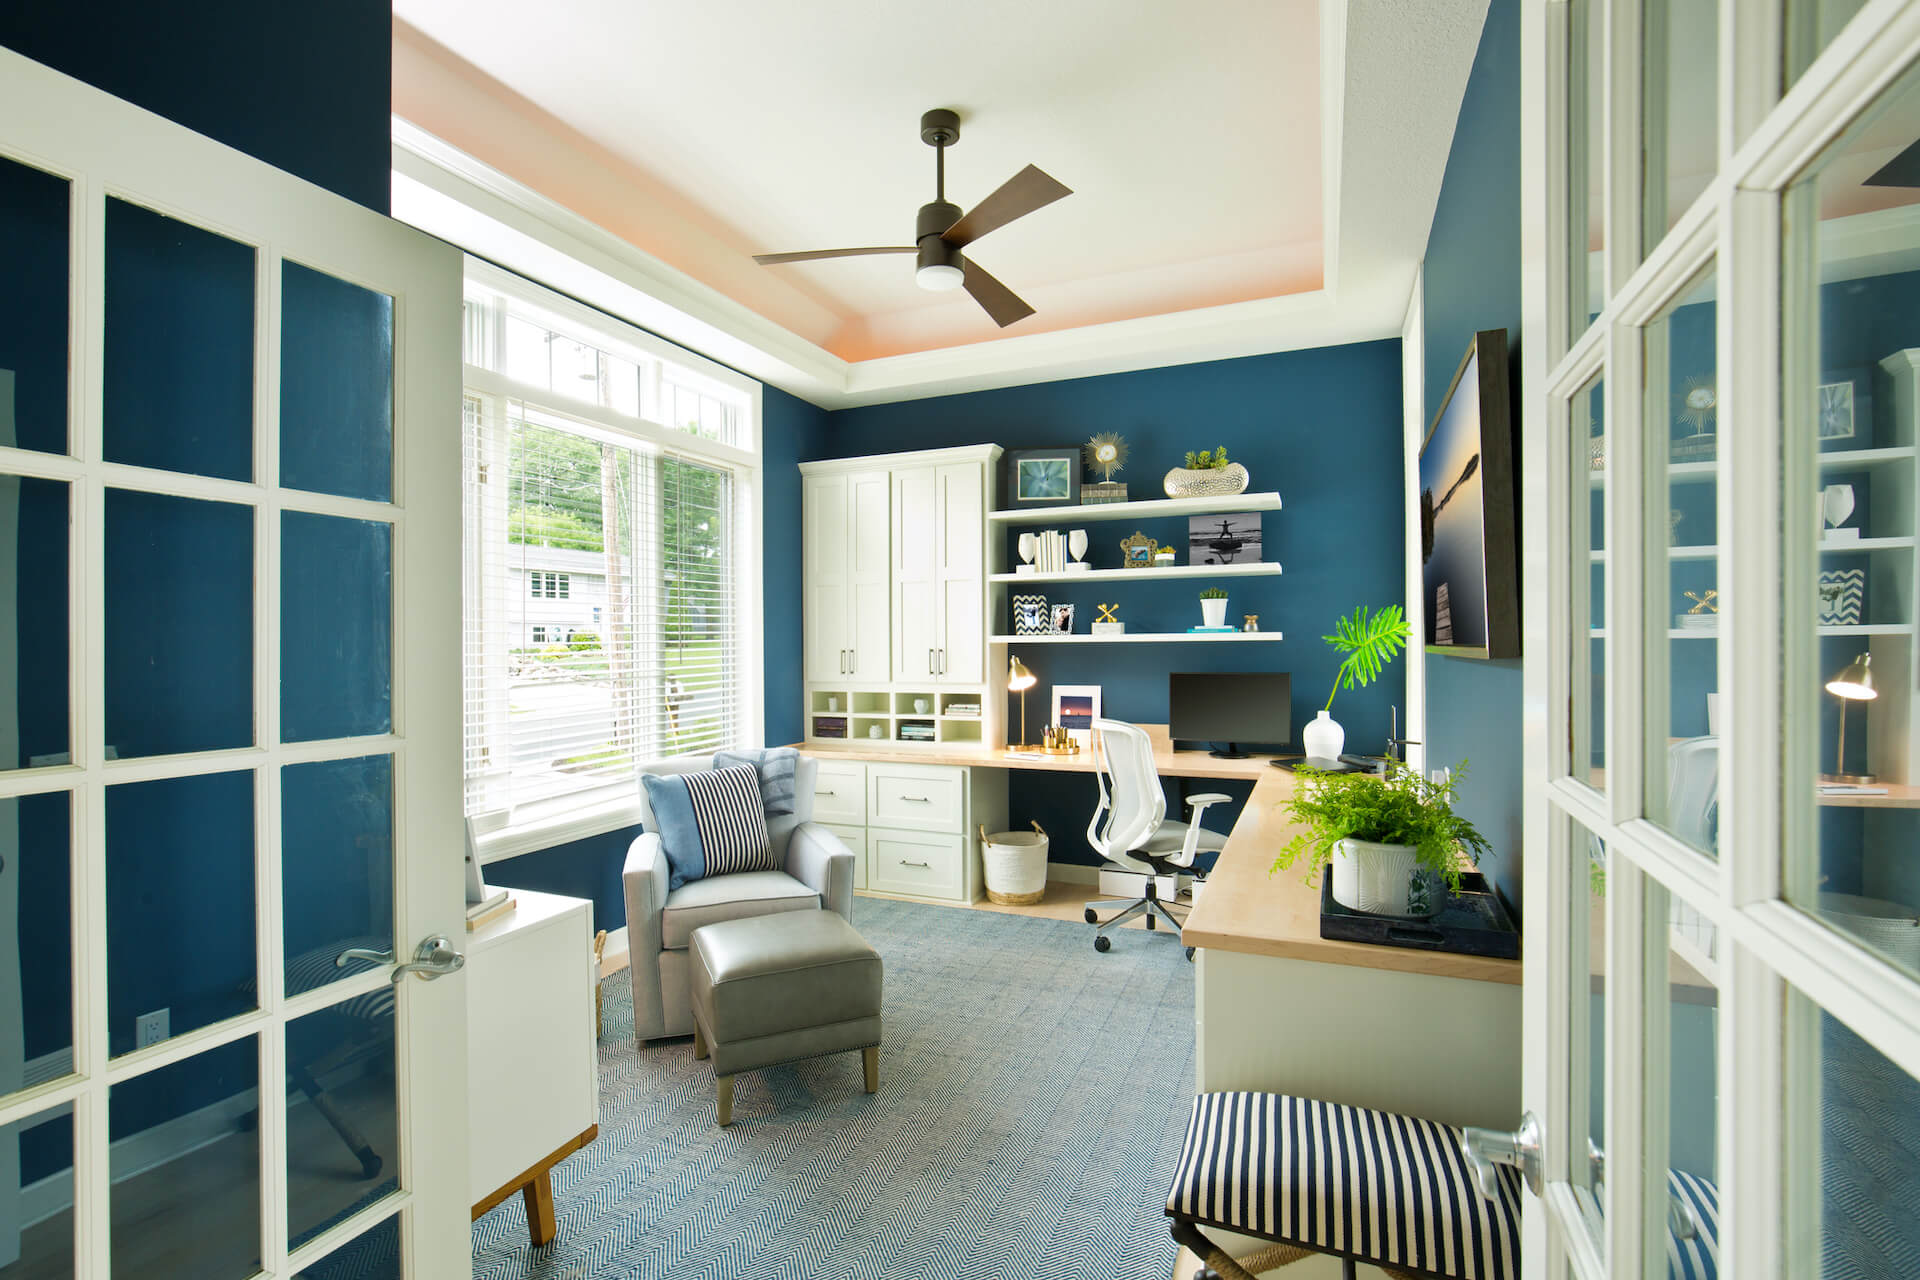 Modern Contemporary Interior Design Of Home Office Room